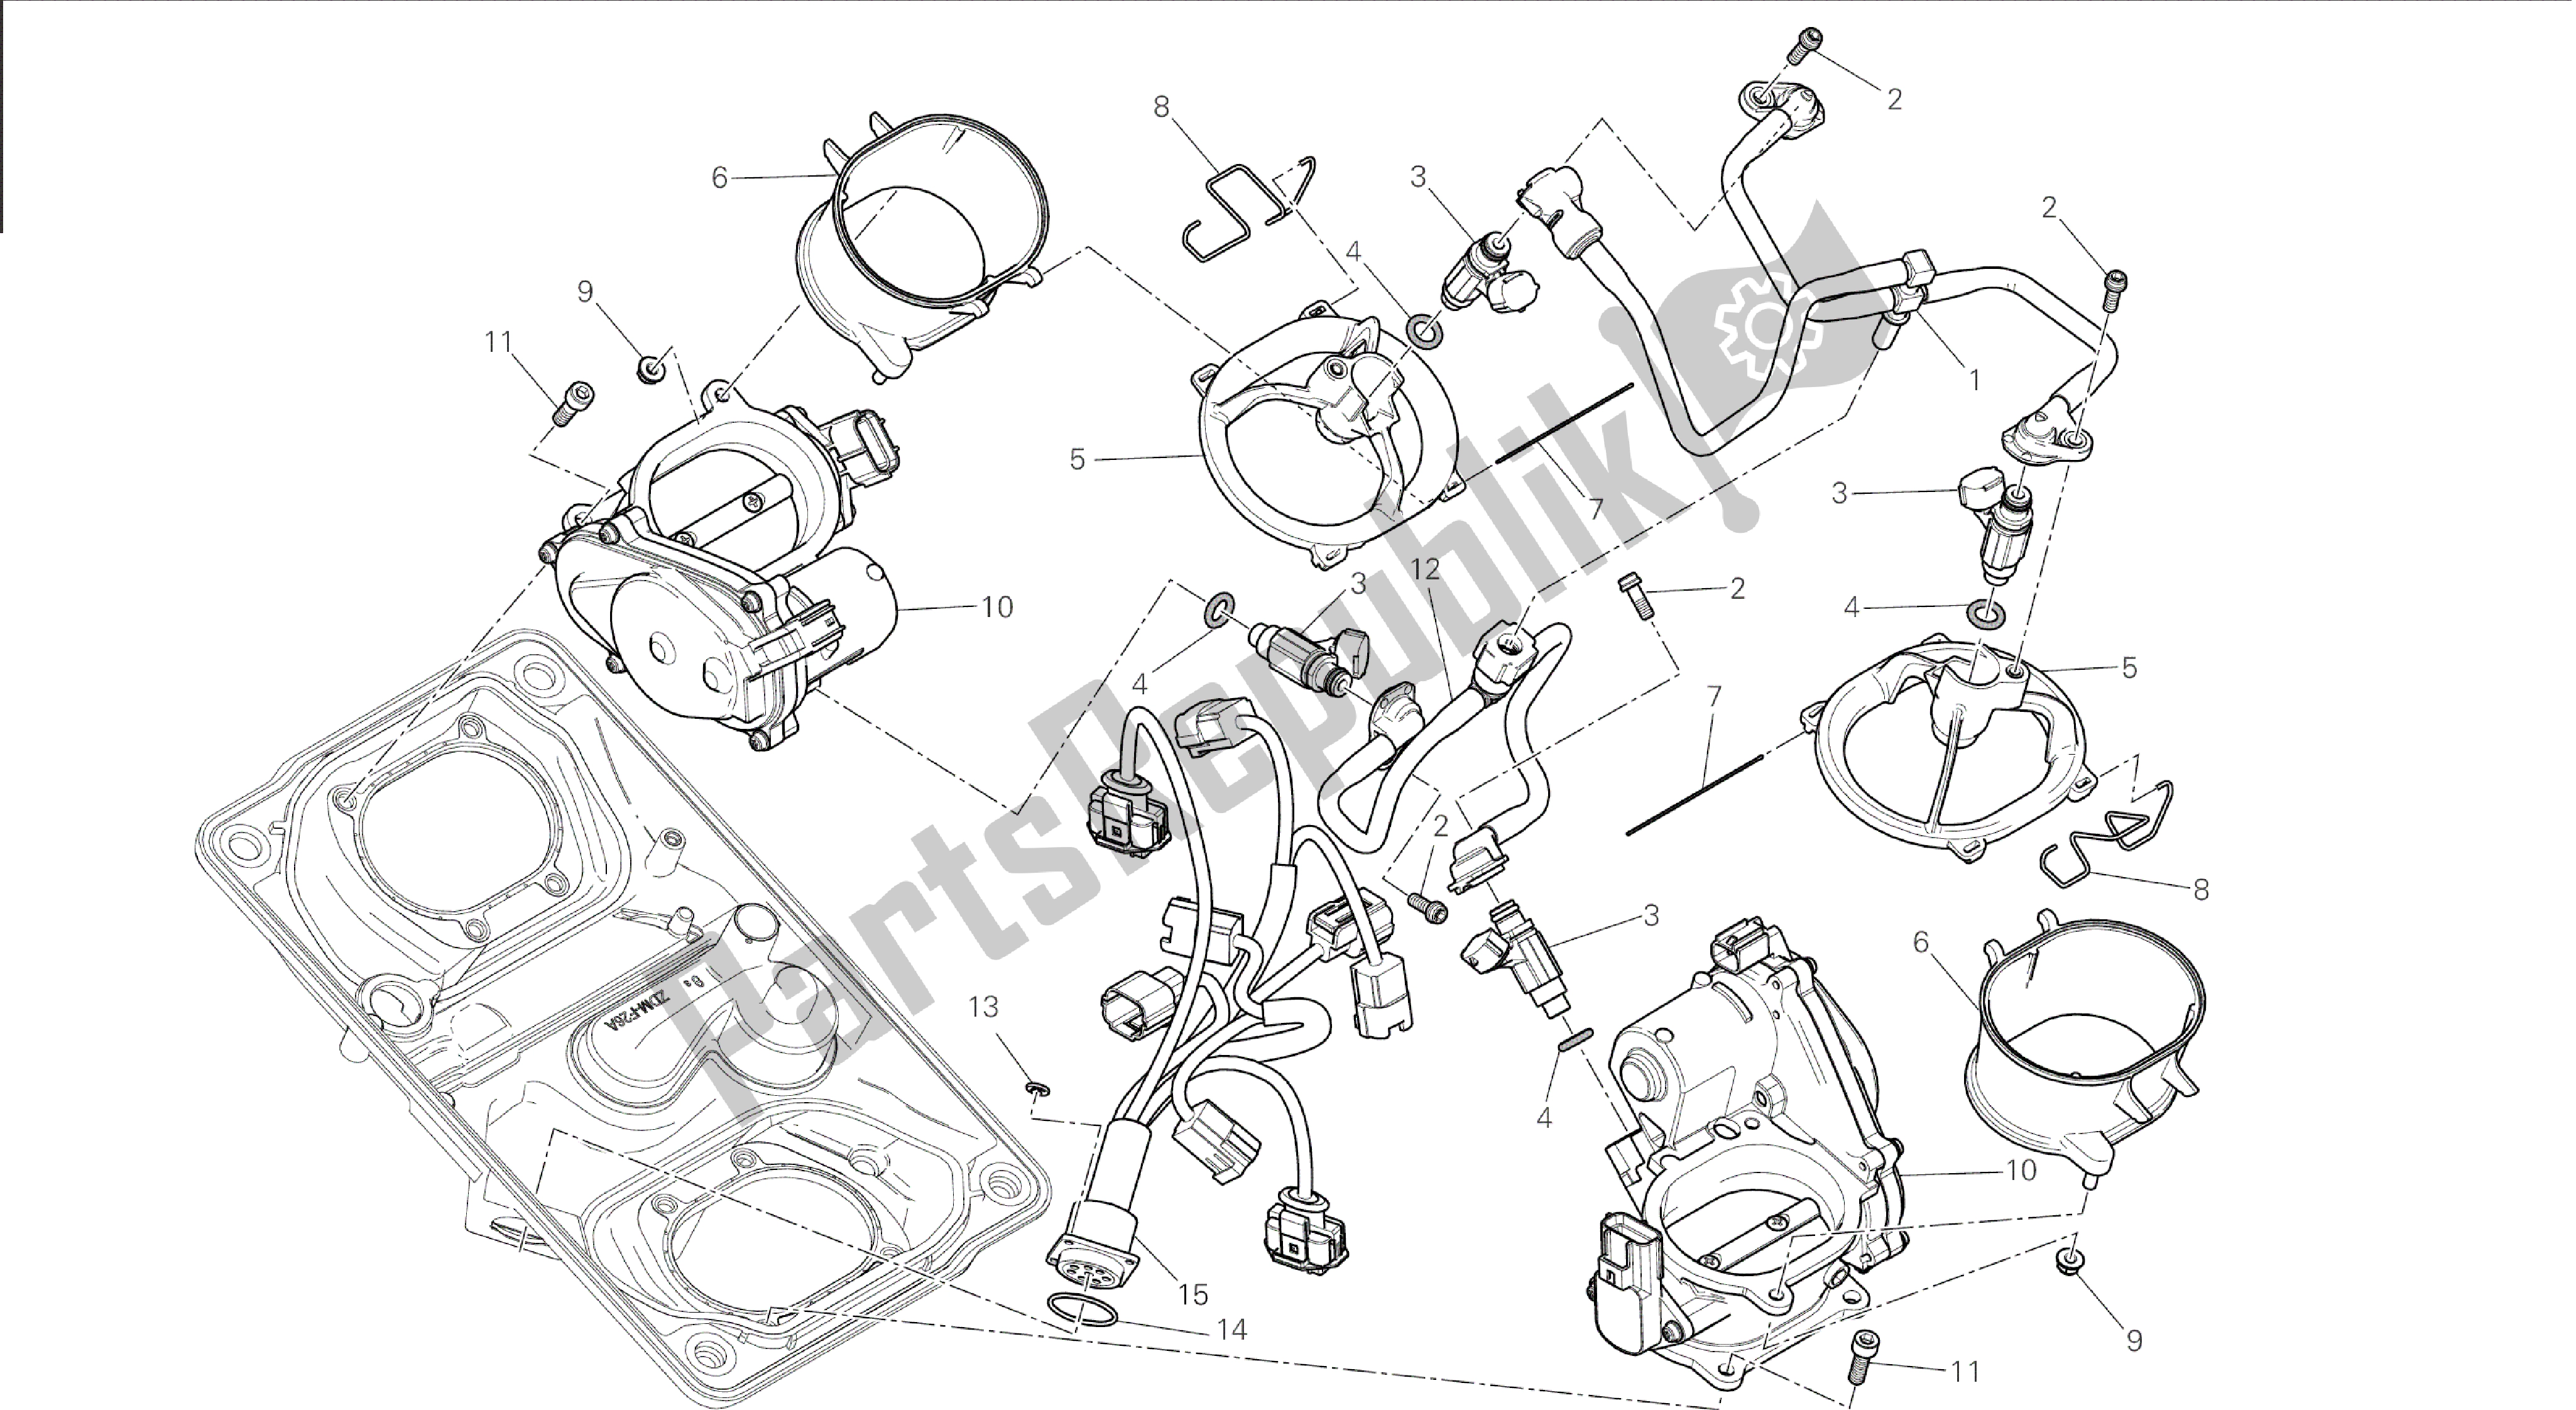 Alle onderdelen voor de Tekening 017 - Gasklephuis [mod: 1199 R; Xst: Aus, Eur, Fra, Jap, Twn] Groepsframe van de Ducati Panigale 1198 2015